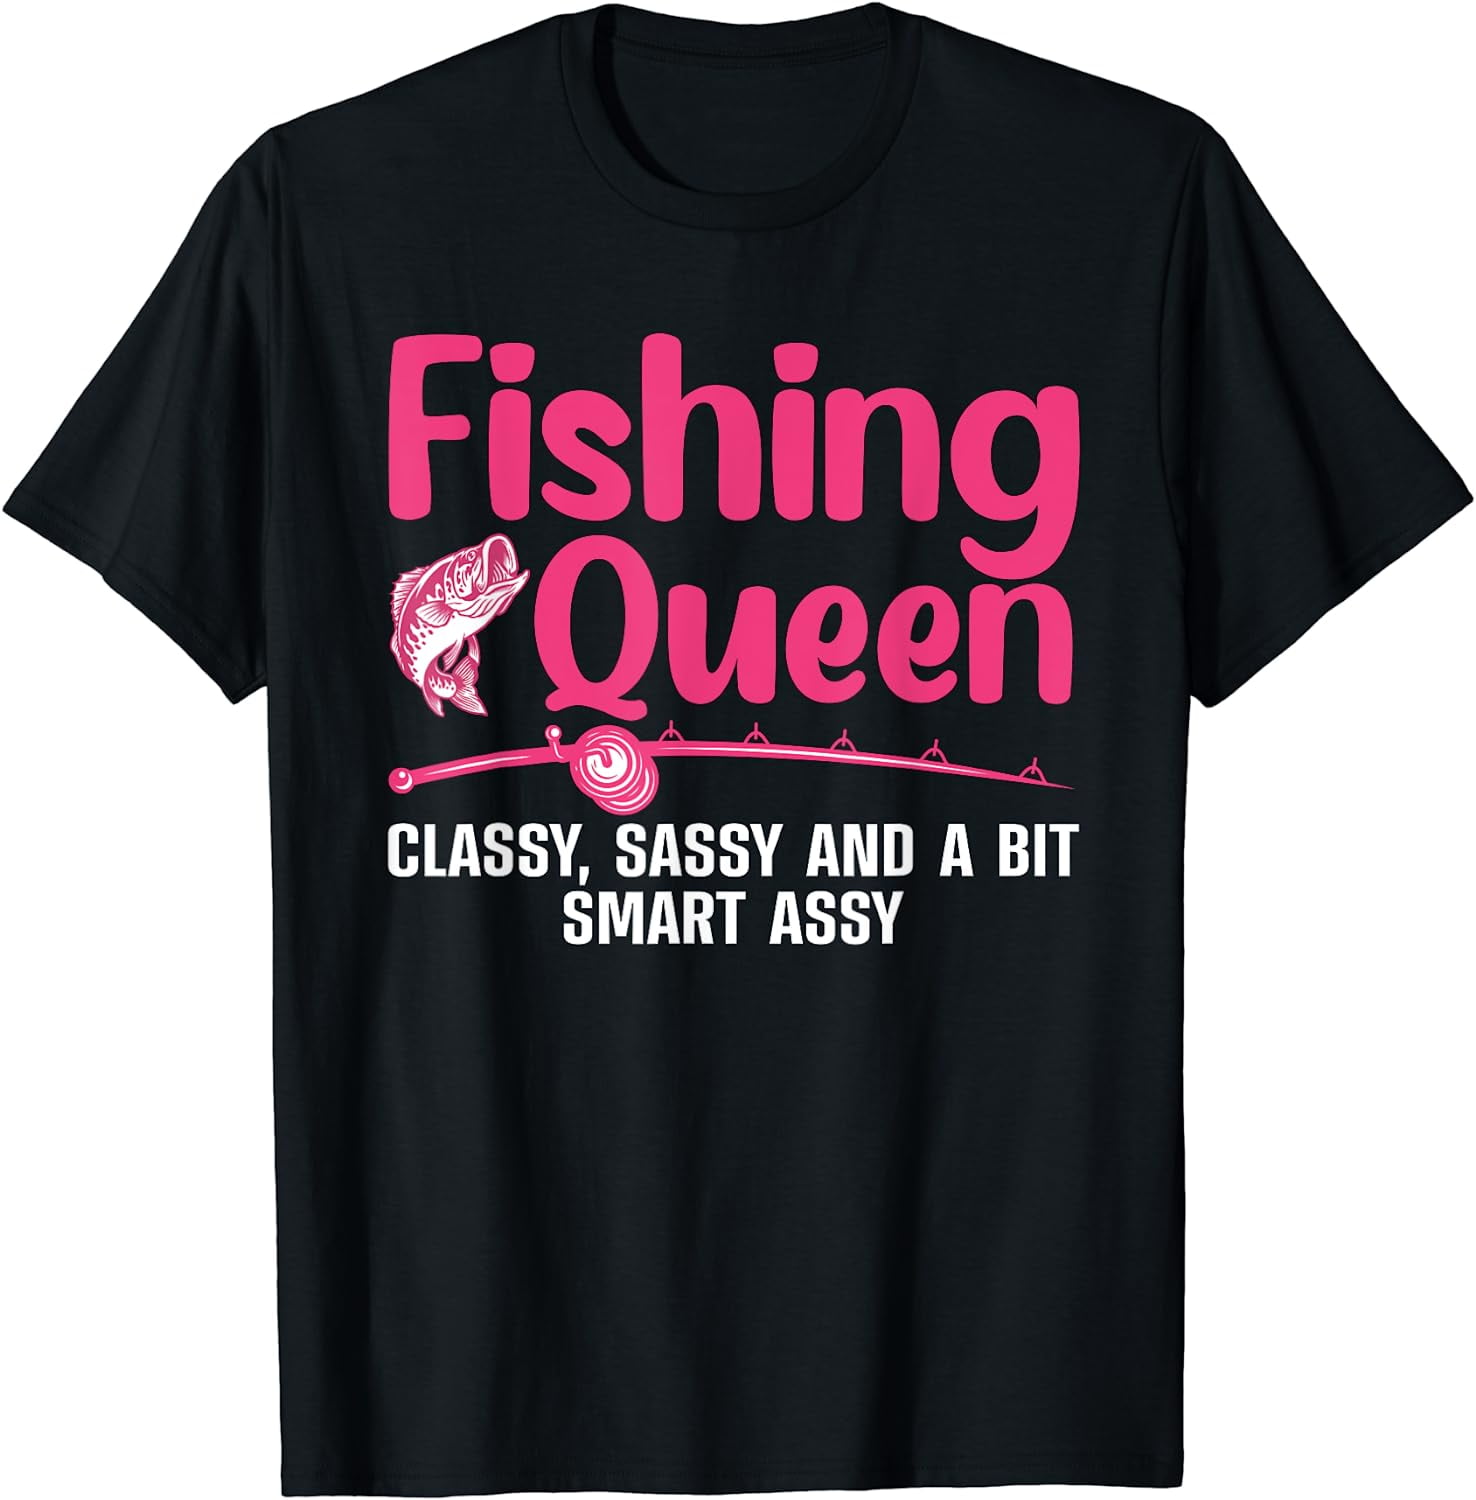 Funny Fishing Queen Design For Women Ladies Fishing Lovers T-Shirt 